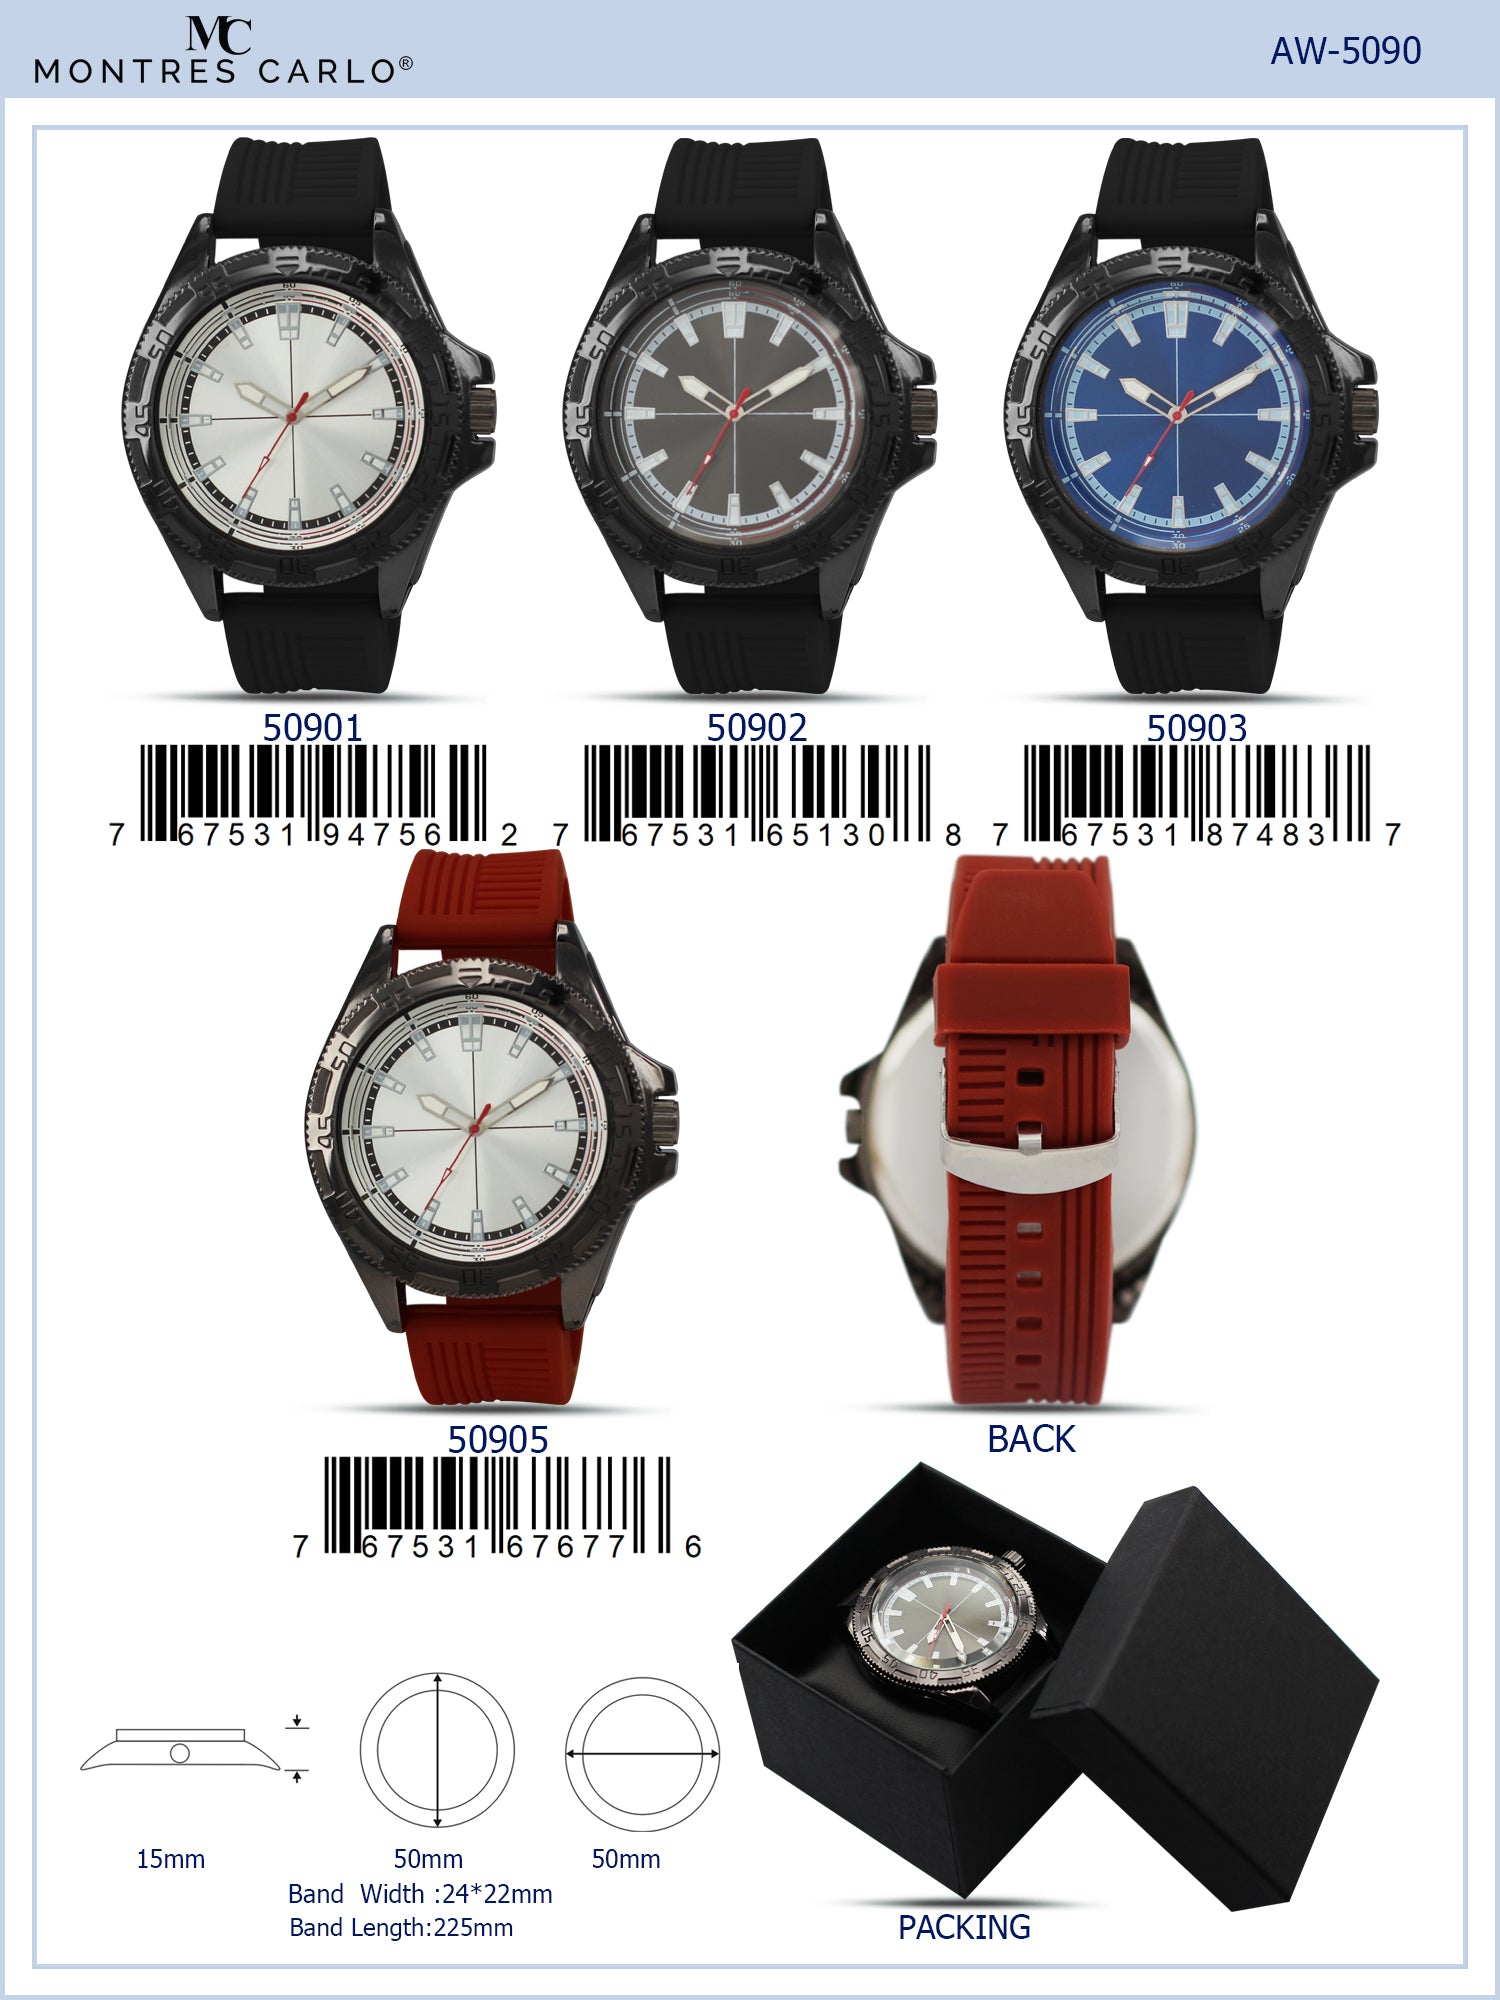 5090 - Reloj con correa de silicona preempaquetado